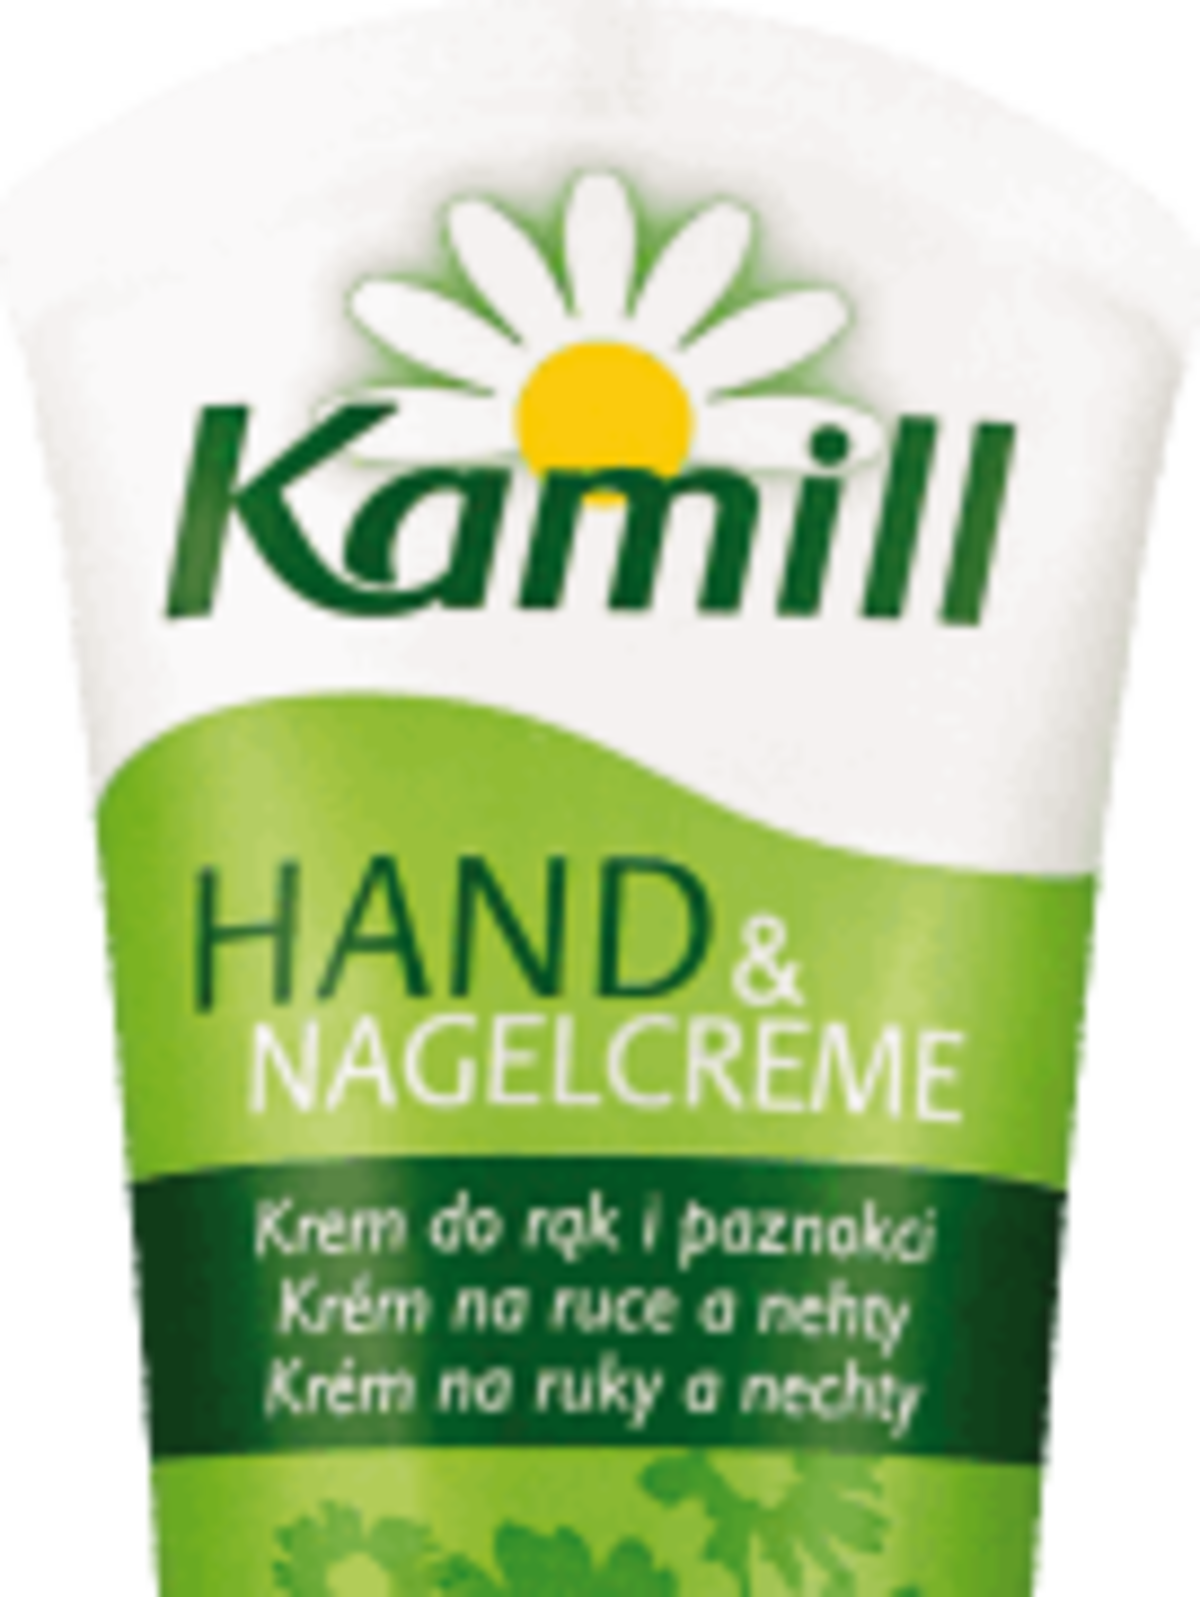 Kamill Classic, Hand & Nagel Creme